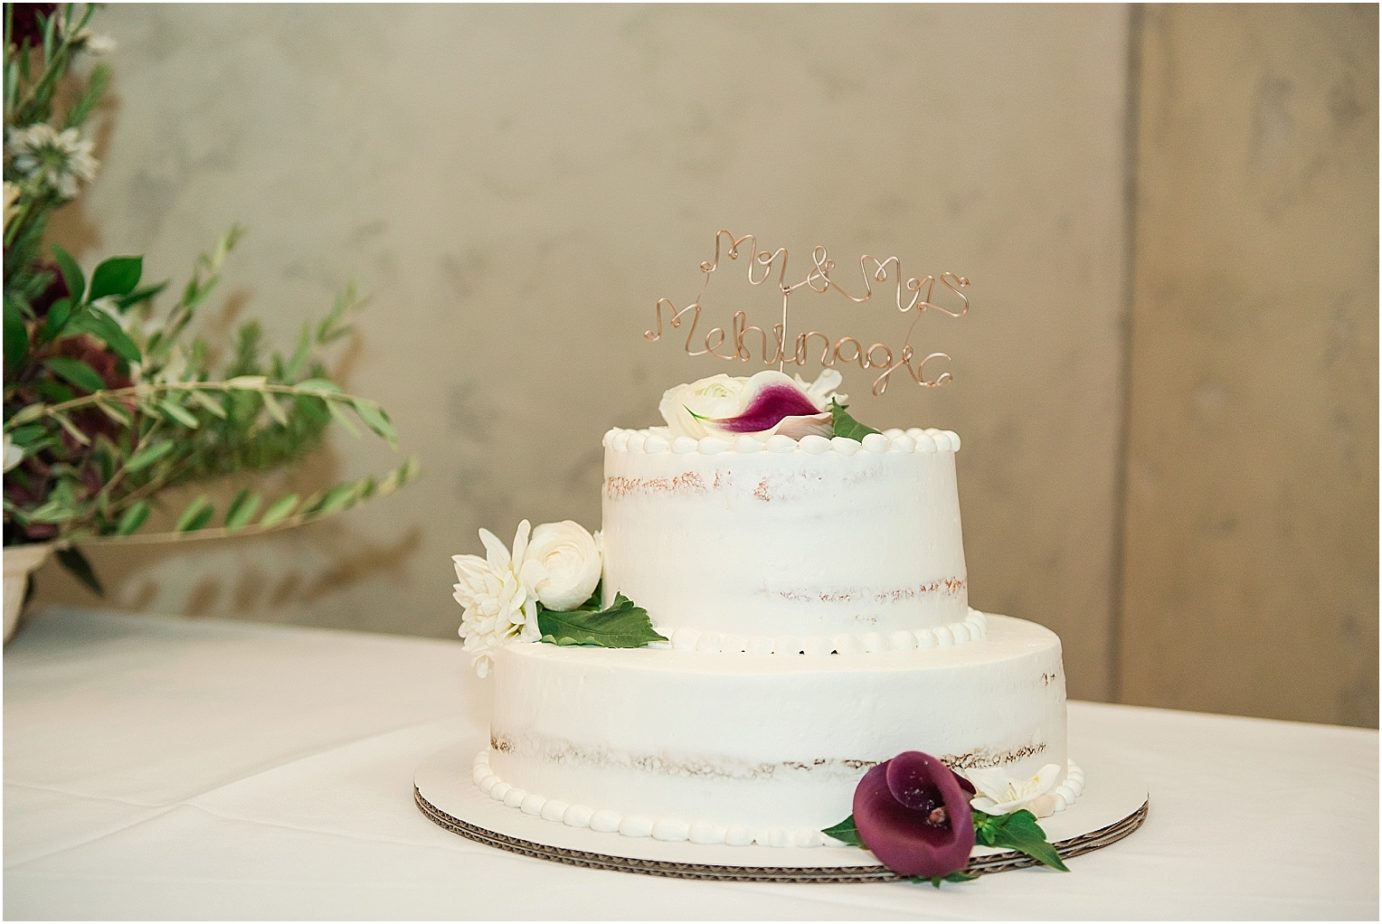 Terra Blanca Winery Wedding Benton City Photographer Armin and Kendall cake cutting